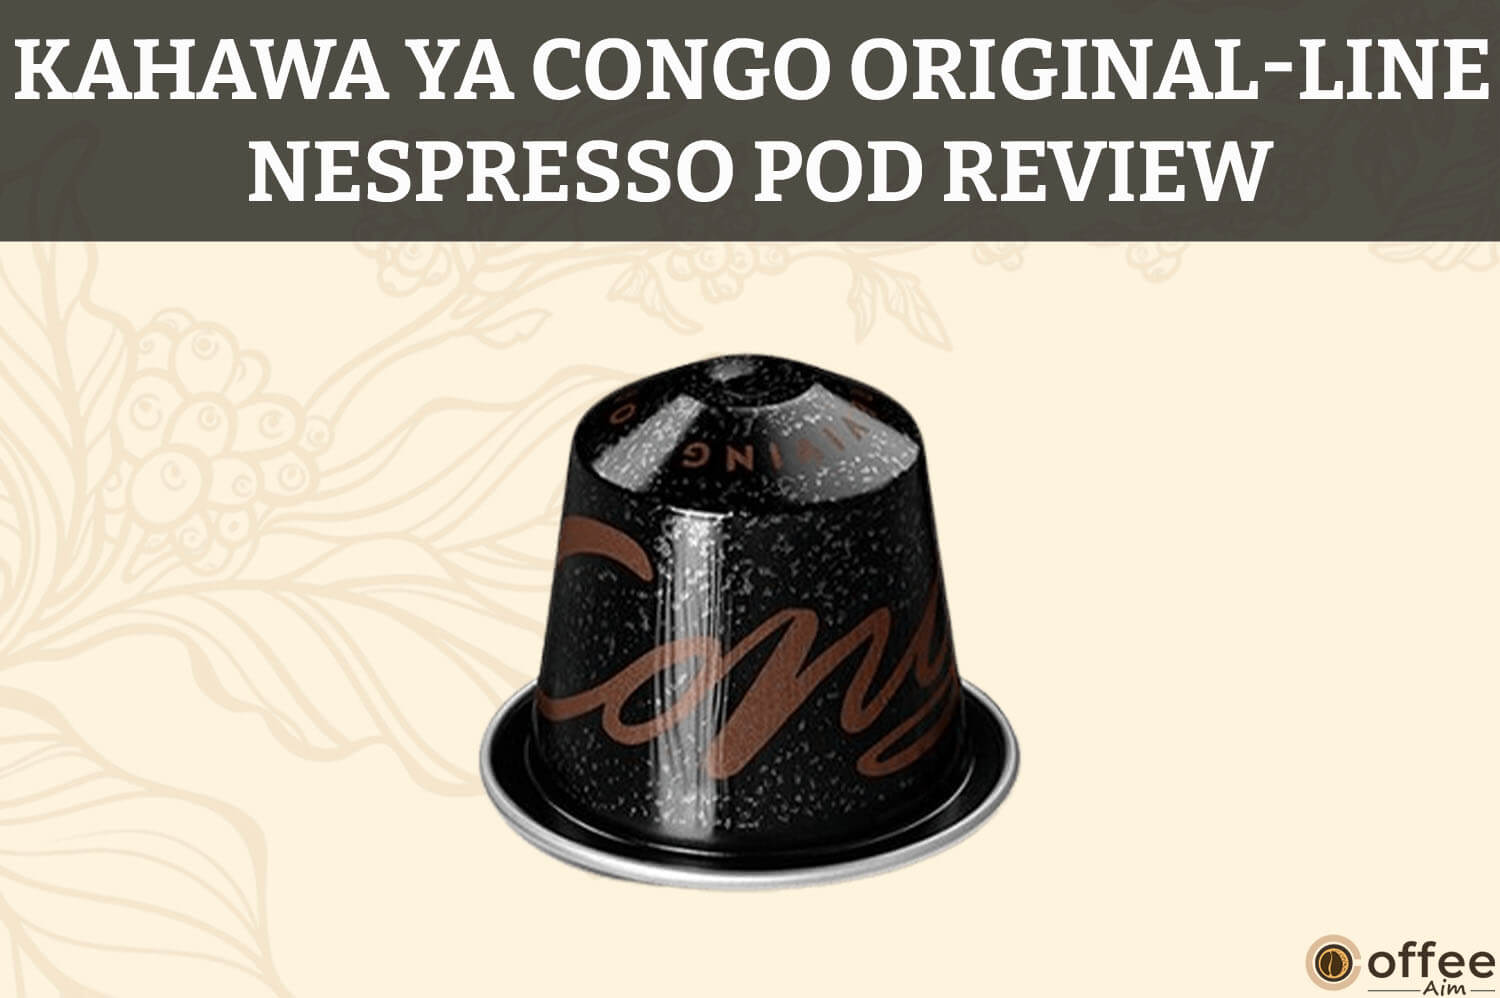 Kahawa-Ya-Congo-Original-Line-Nespresso-Pod-Review